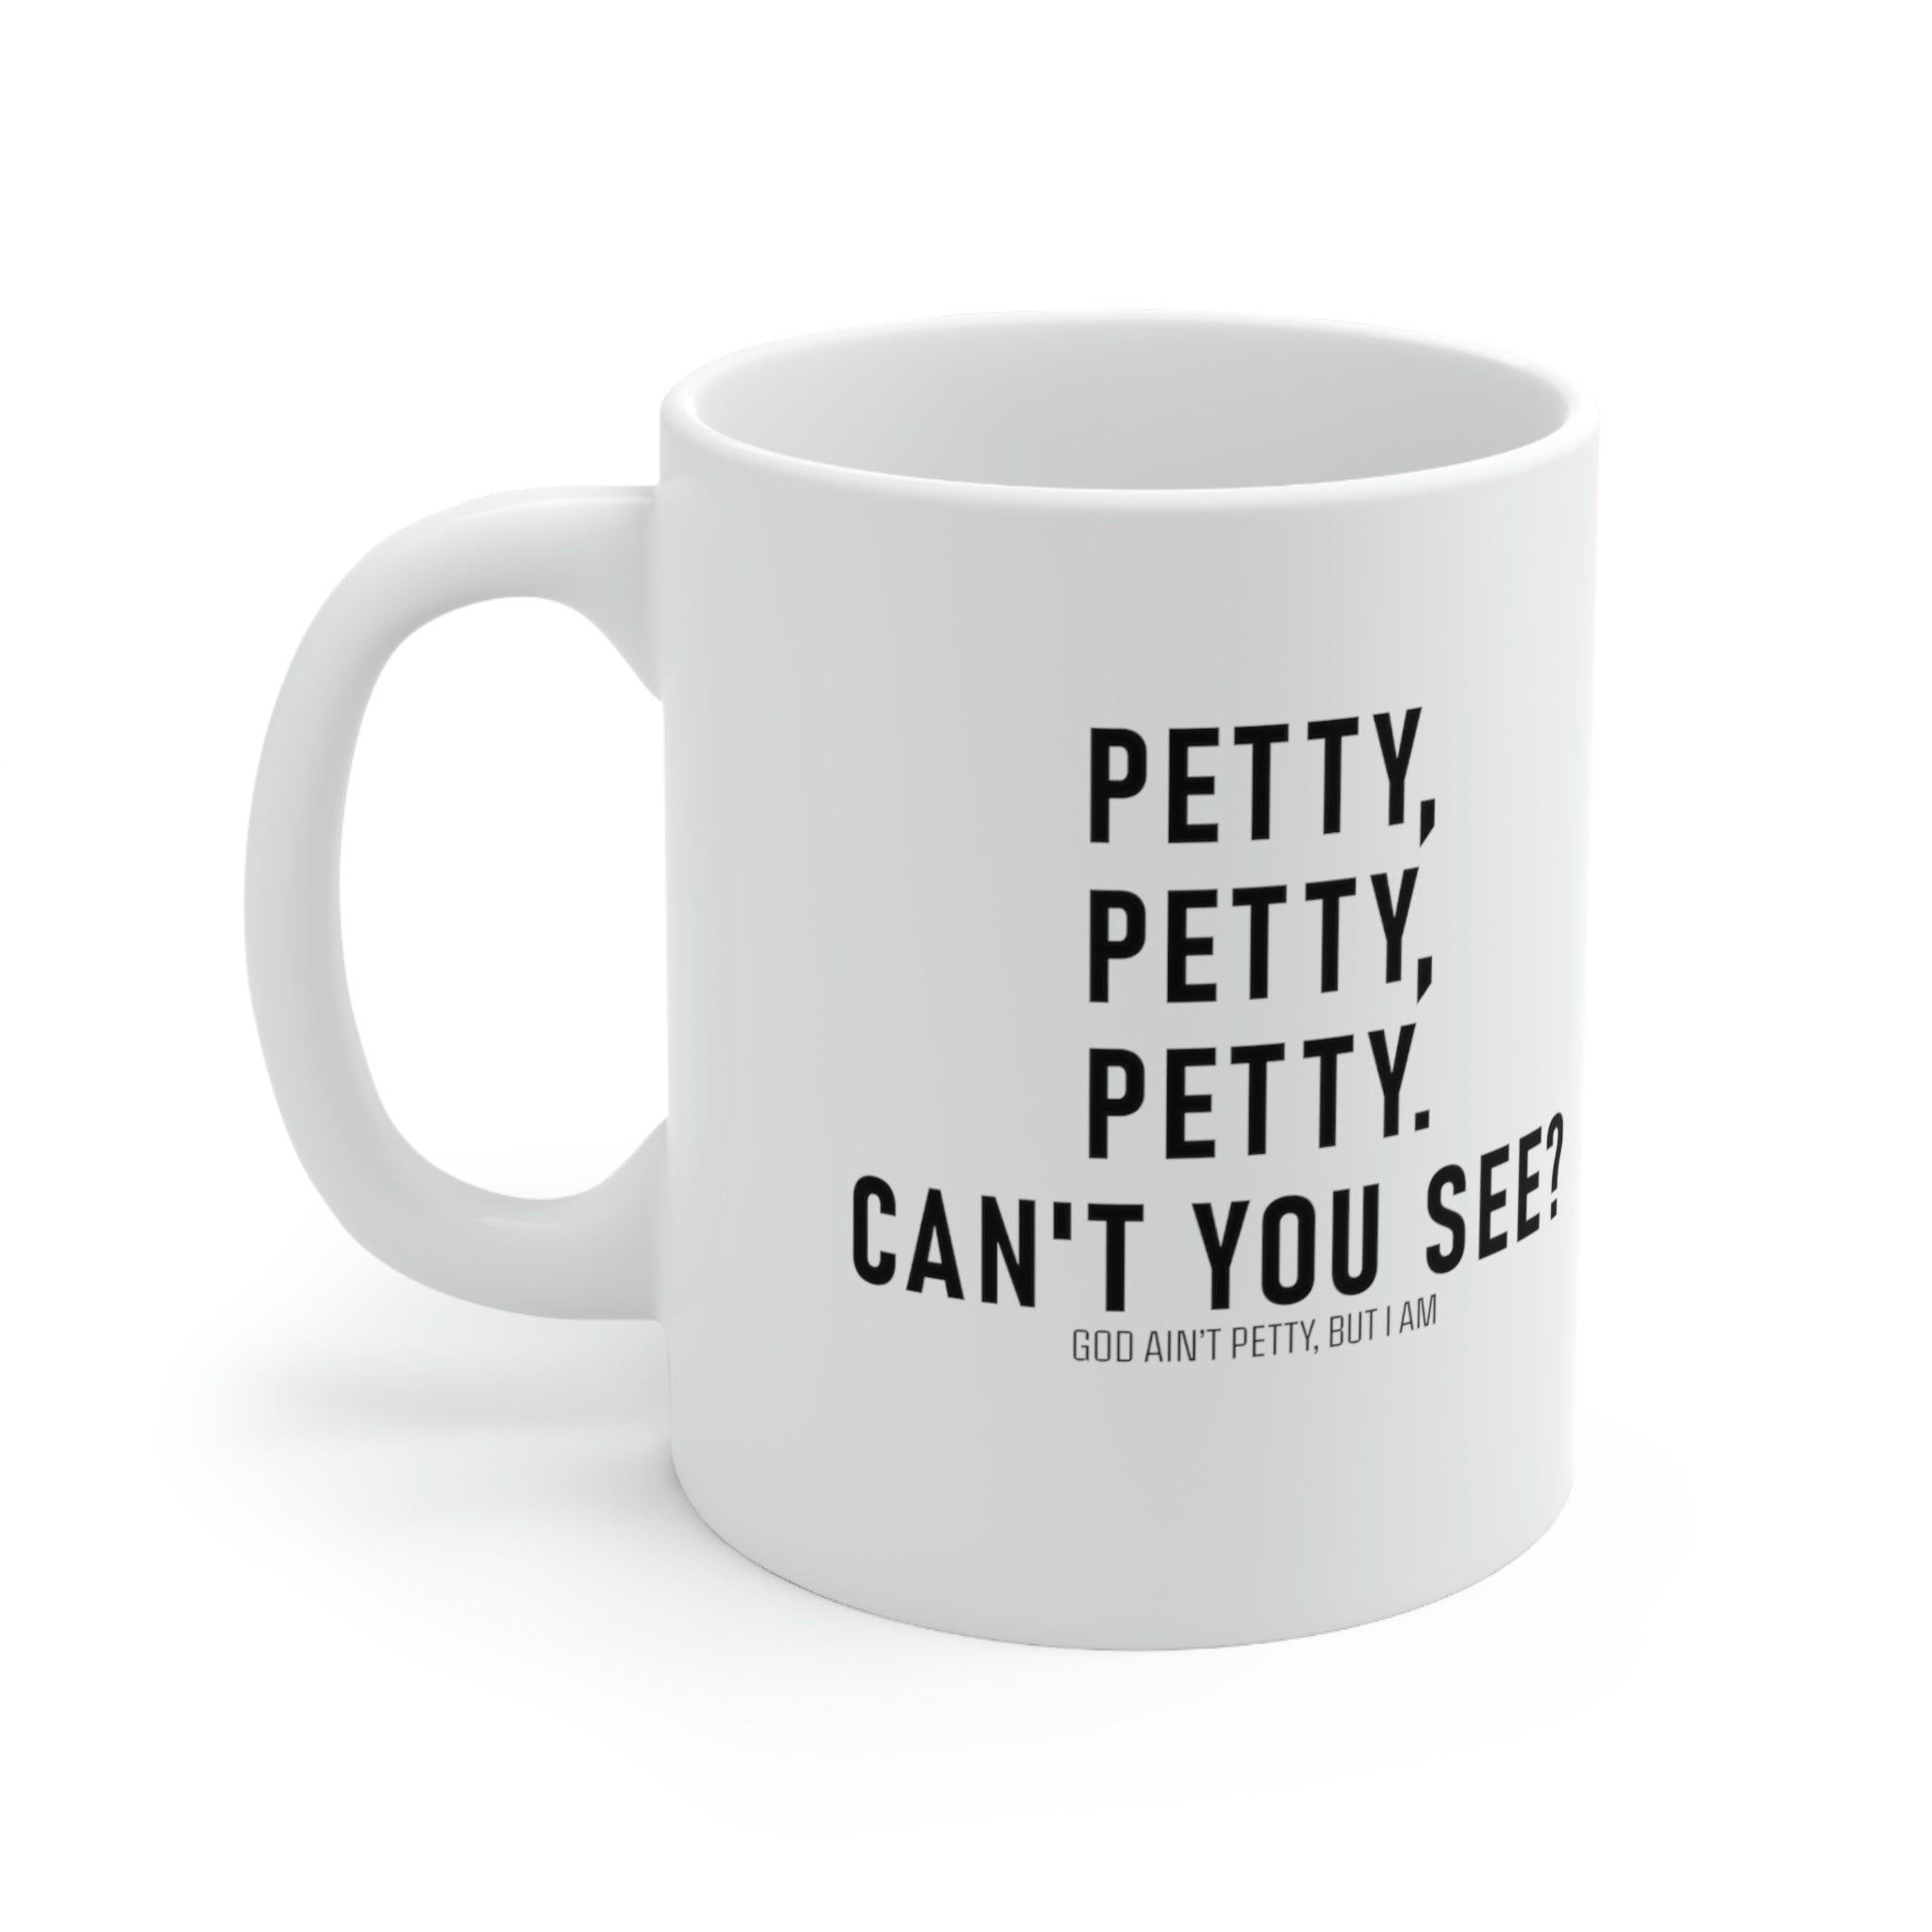 Petty, Petty, Petty. Can't you see Mug 11oz (White/Black)-Mug-The Original God Ain't Petty But I Am